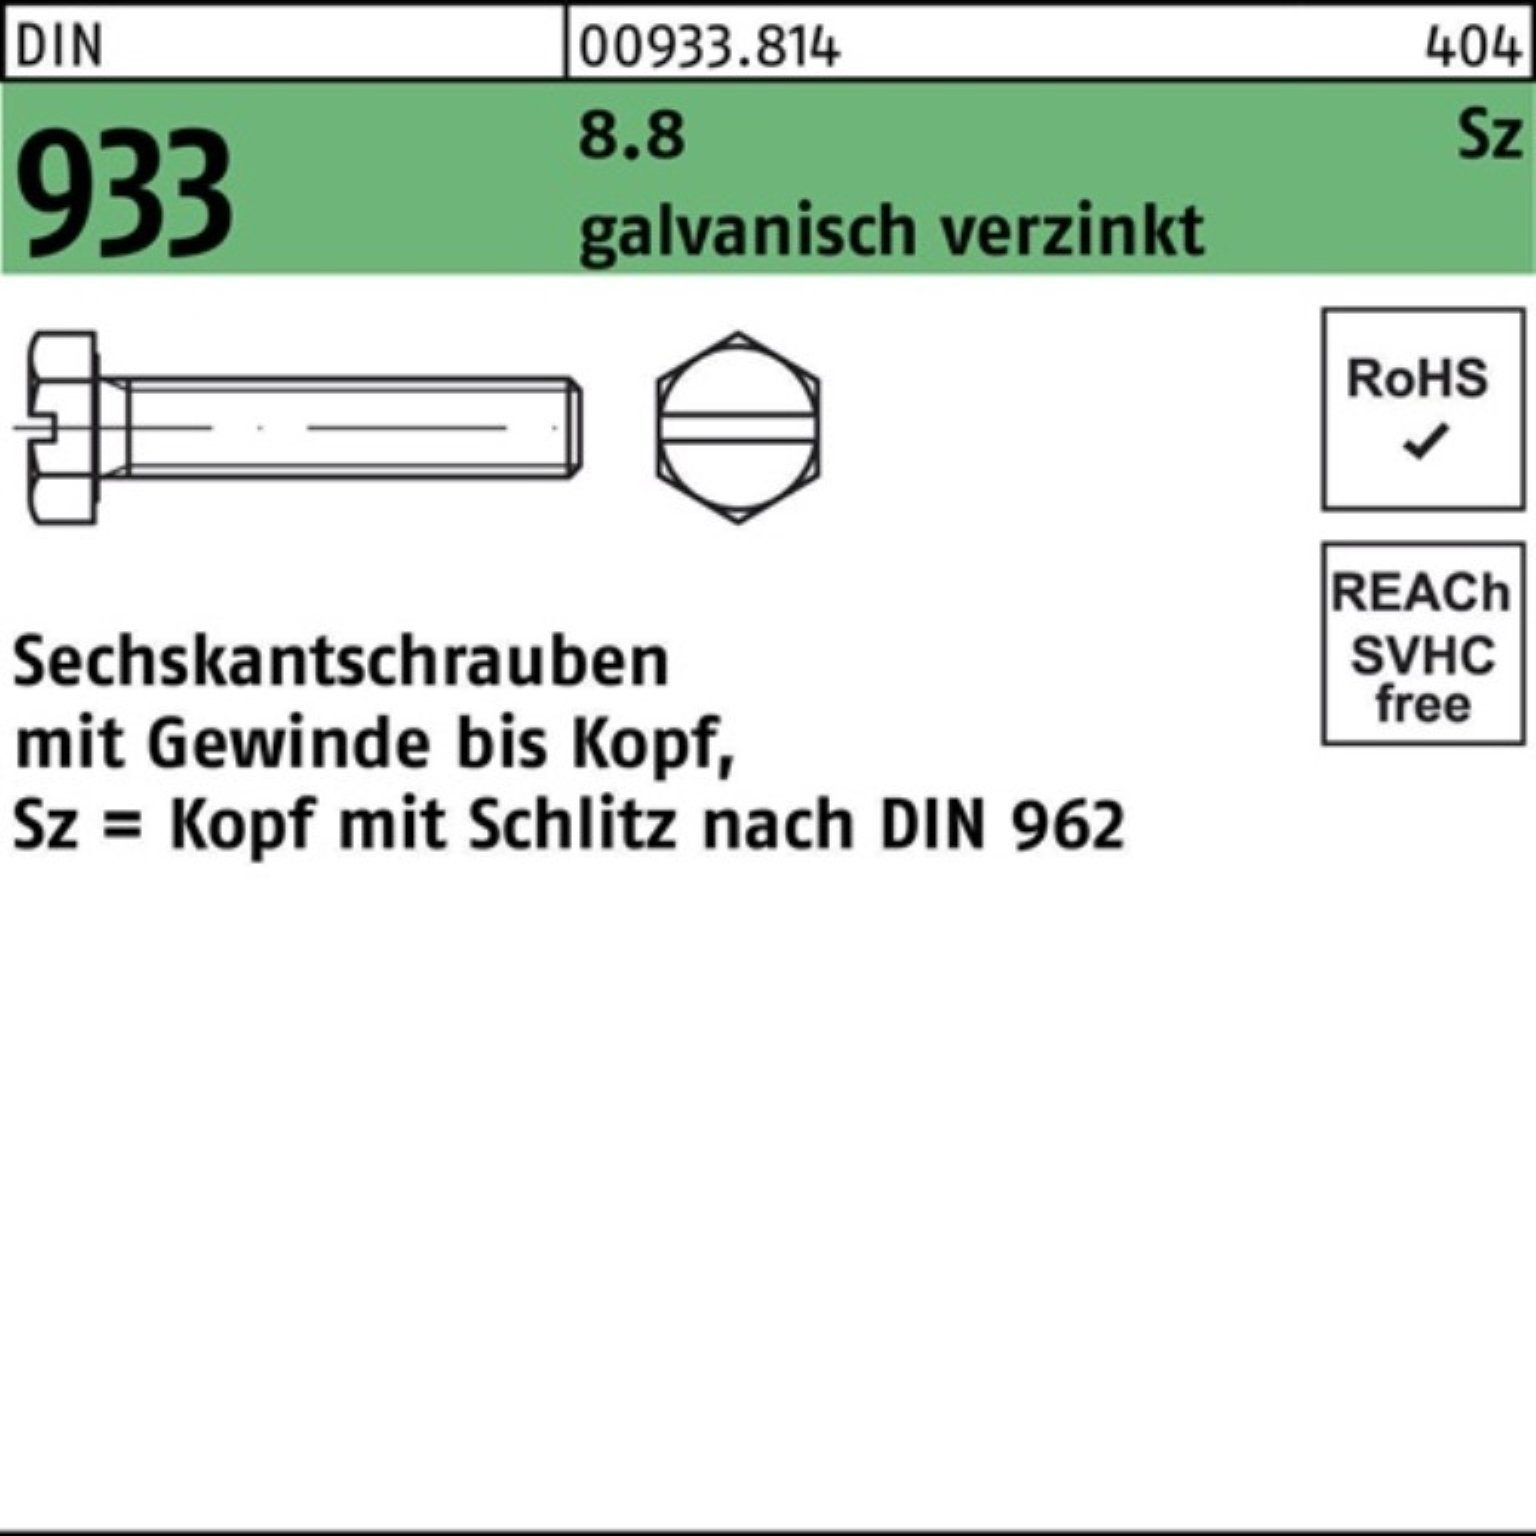 Pack Sechskantschraube Reyher Sechskantschraube VG/Schlitz 30 M8x 933 DIN 200er 8.8 galv.verz.